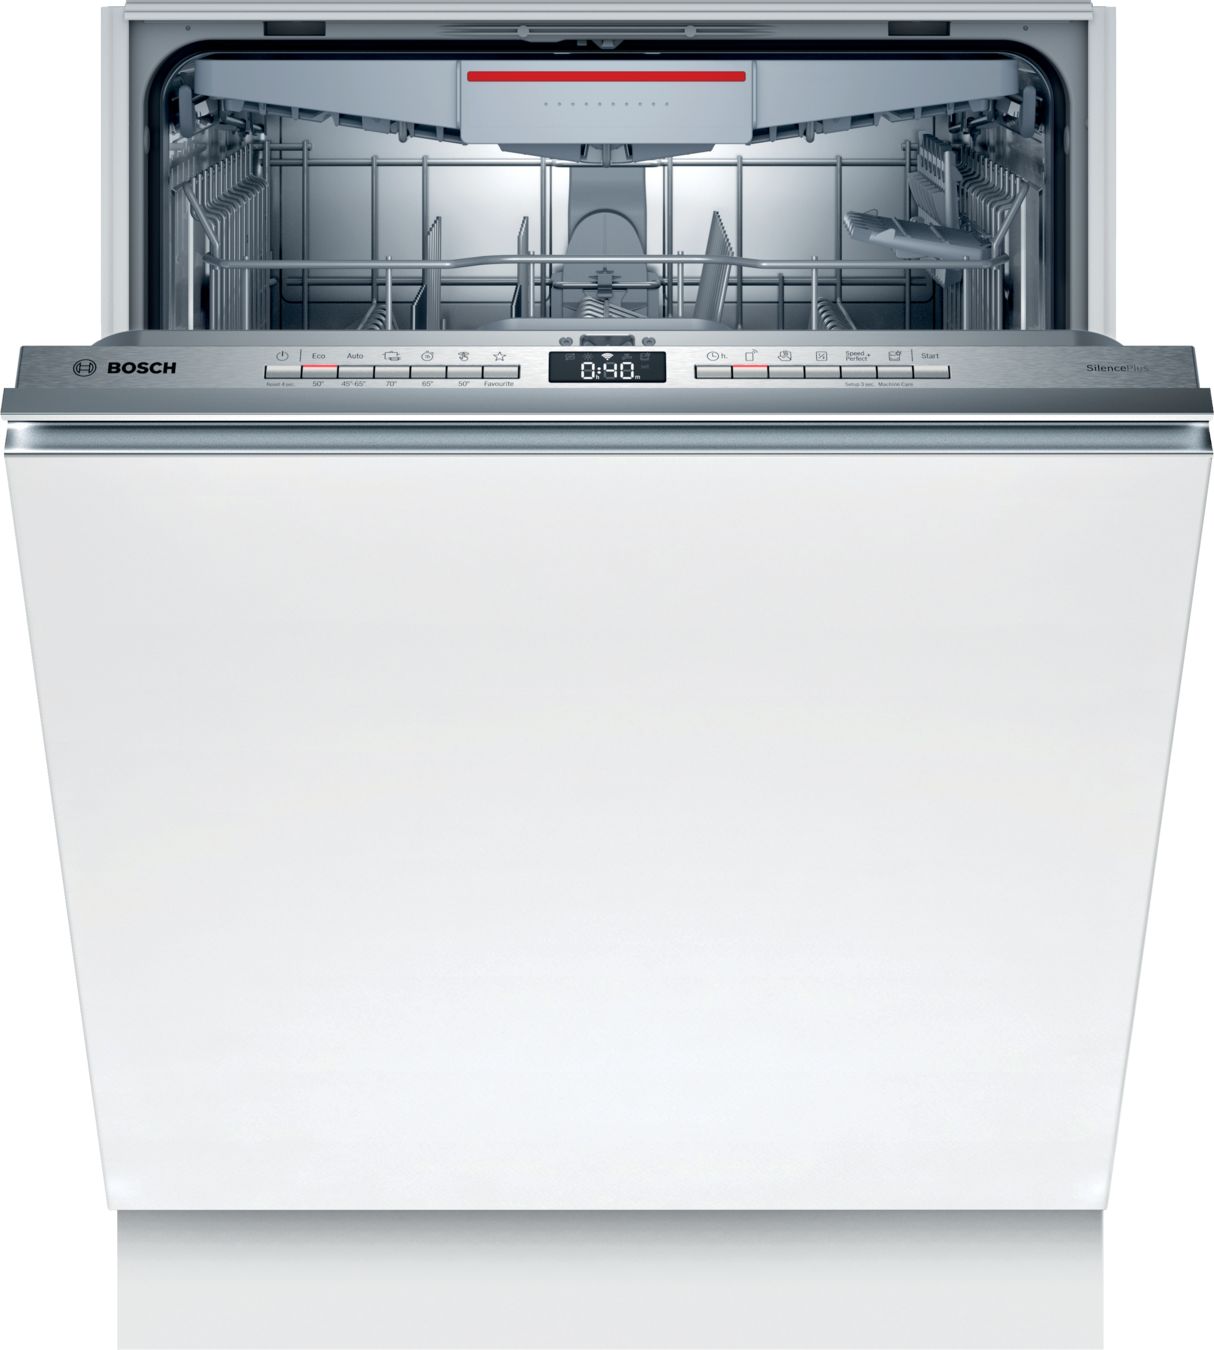 Встраиваемая посудомоечная машина Bosch SMV4EVX14E встраиваемая посудомоечная машина bosch spv4hmx10e